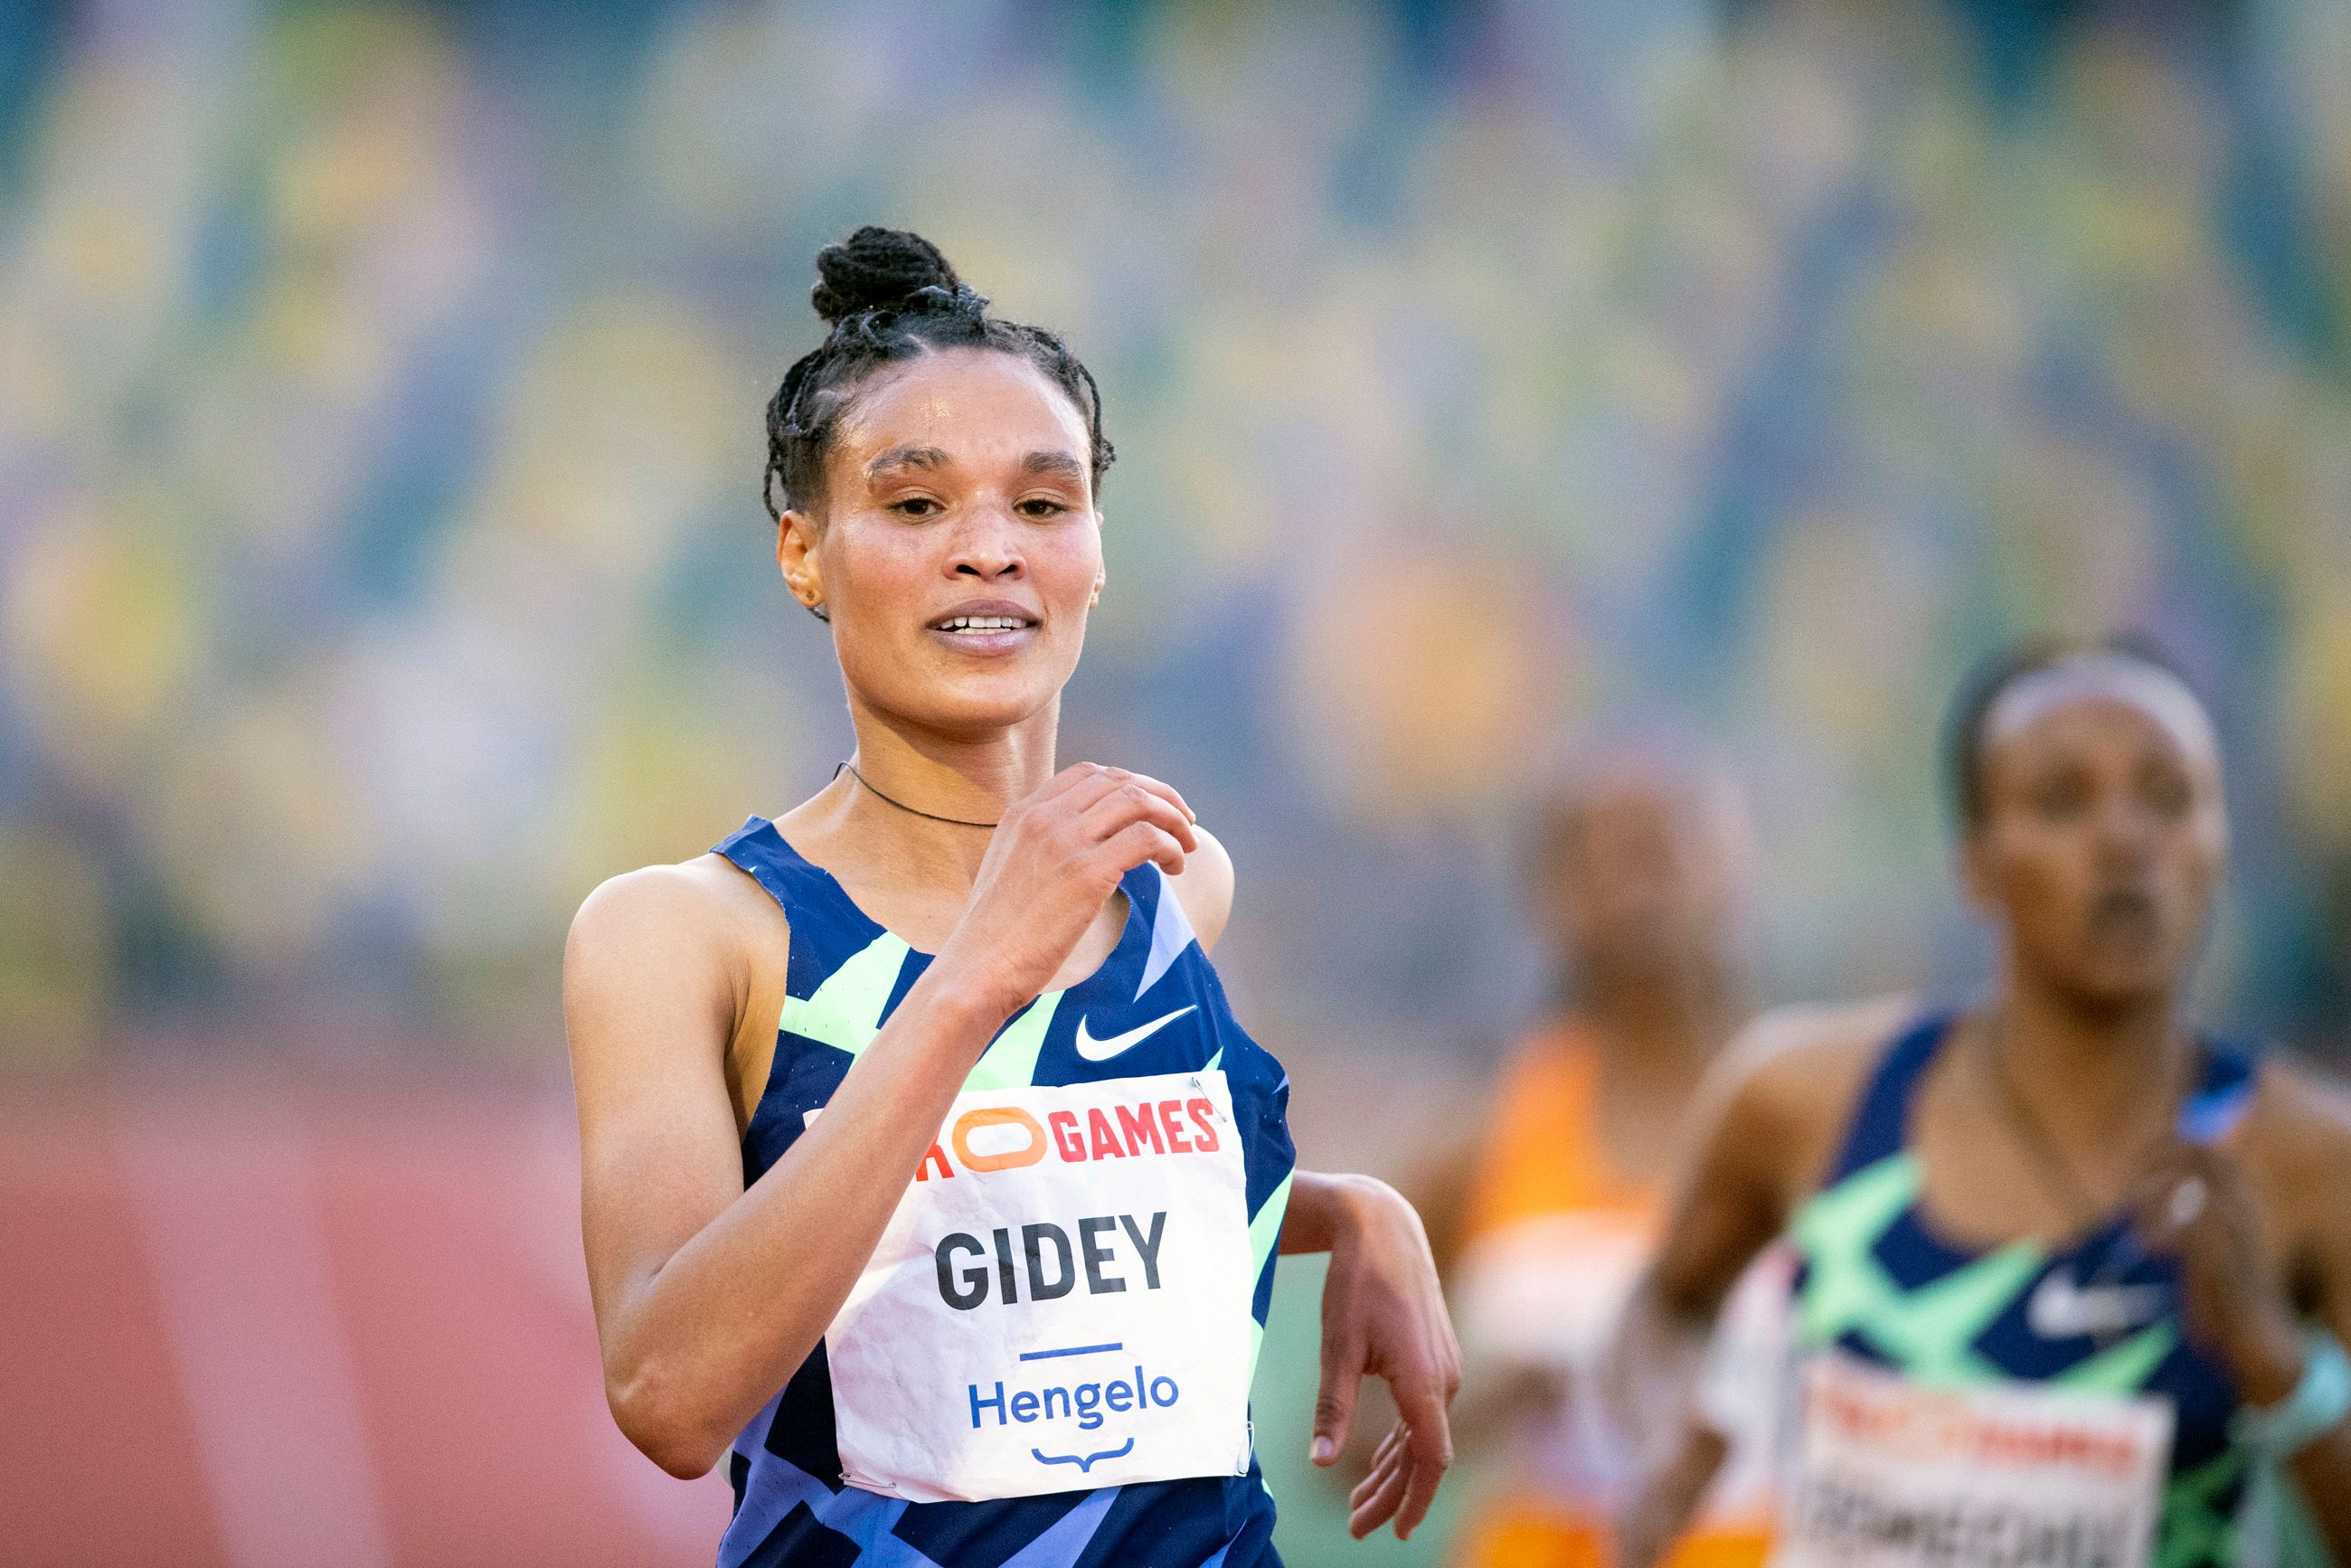 Letesenbet Gidey sets a world 10,000m record in Hengelo